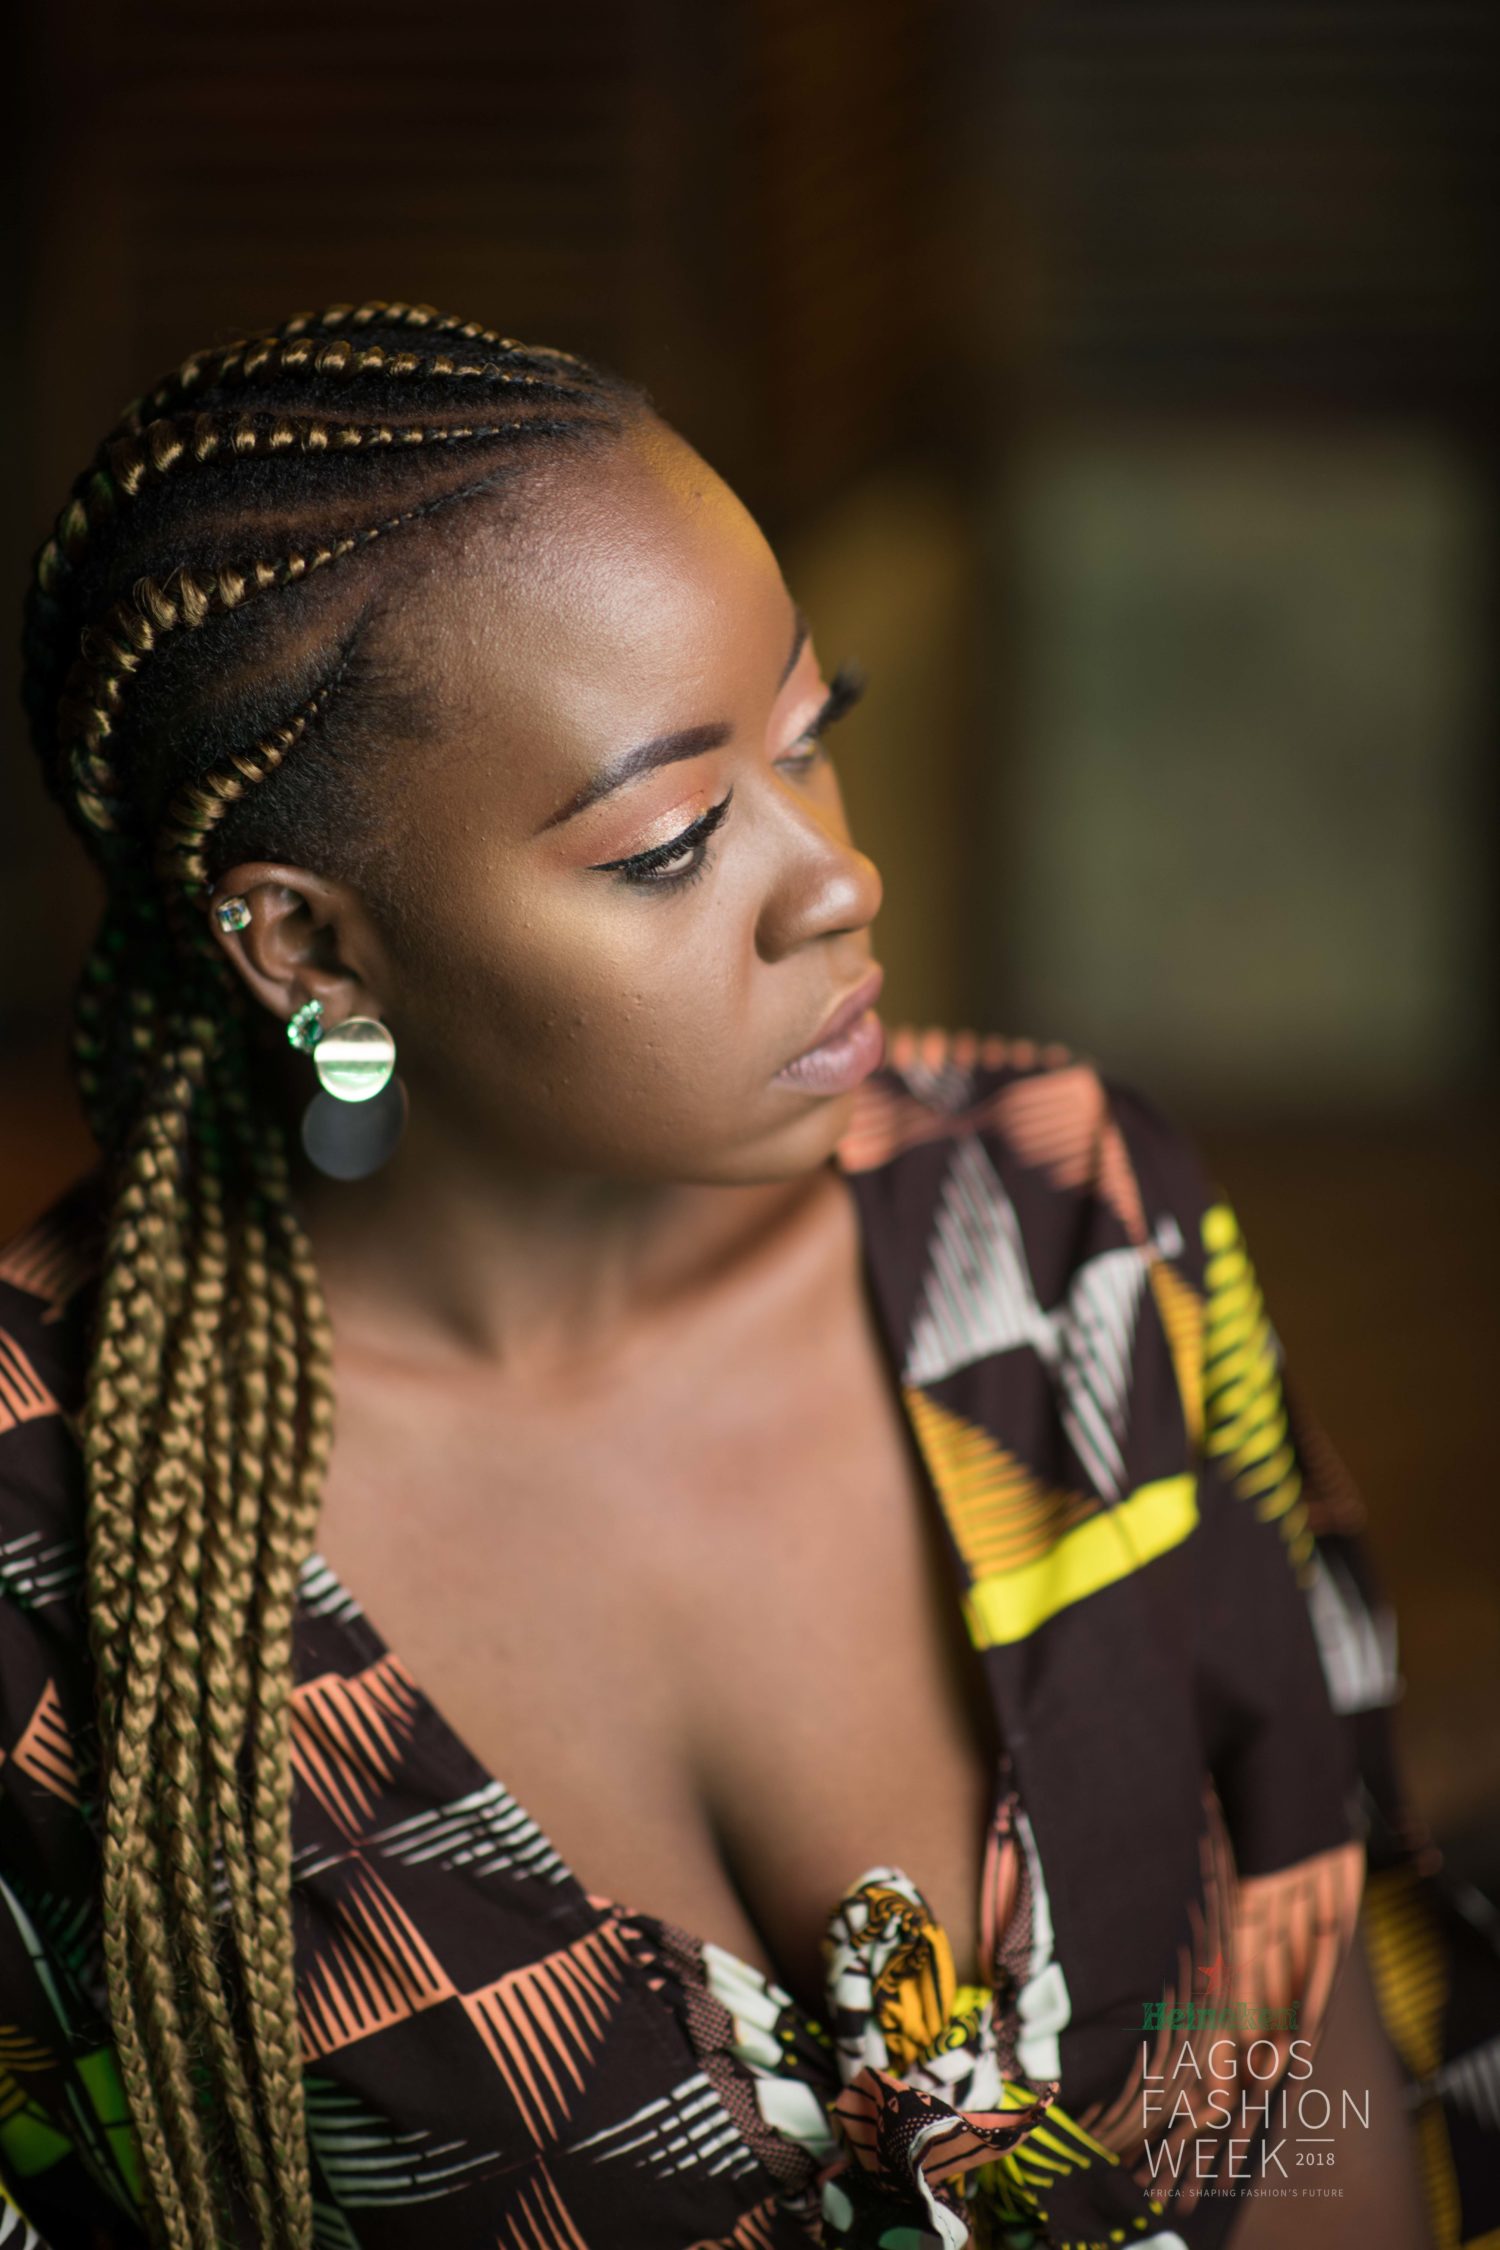 See Every Stunning Look From Kelechi Amadi-Obi’s Heineken Lagos Fashion Week 2018 Portrait Studio – Day 2